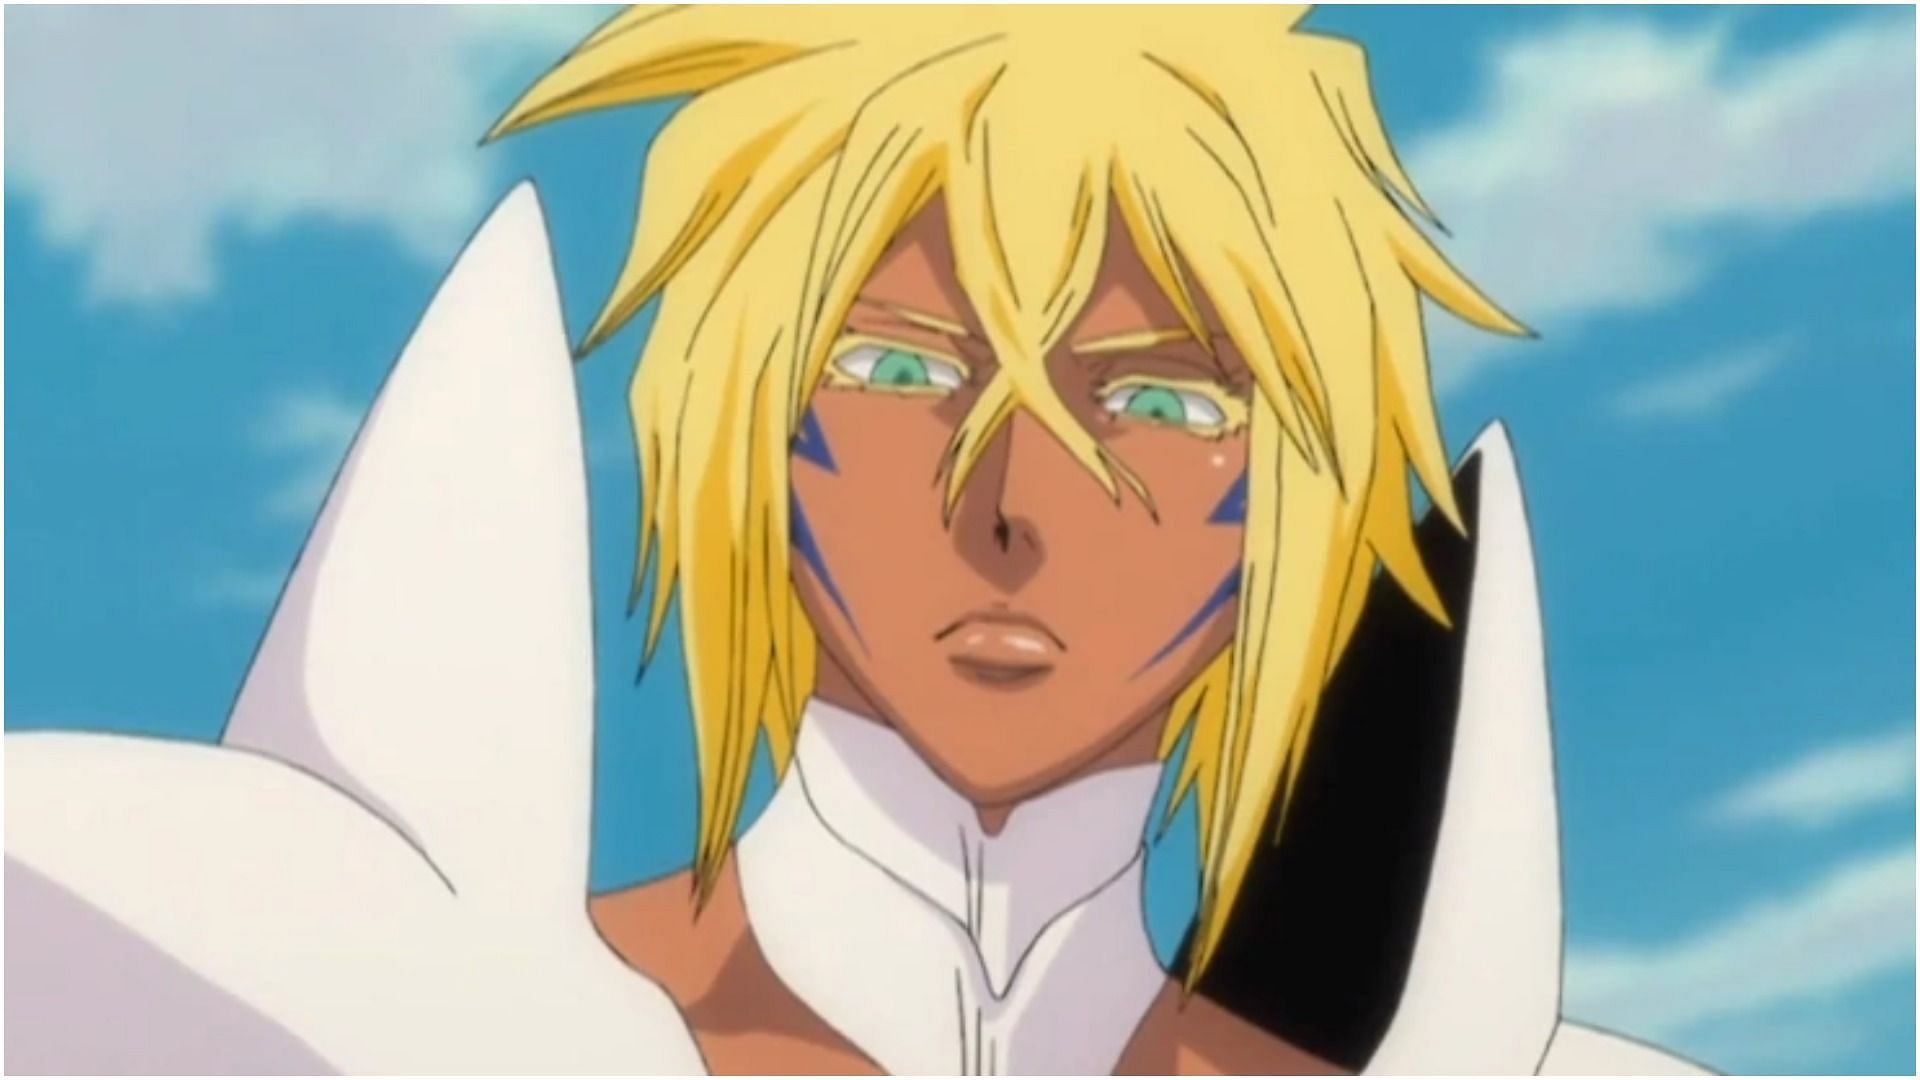 Tier Harribel as seen in the anime (Image via Studio Pierrot)